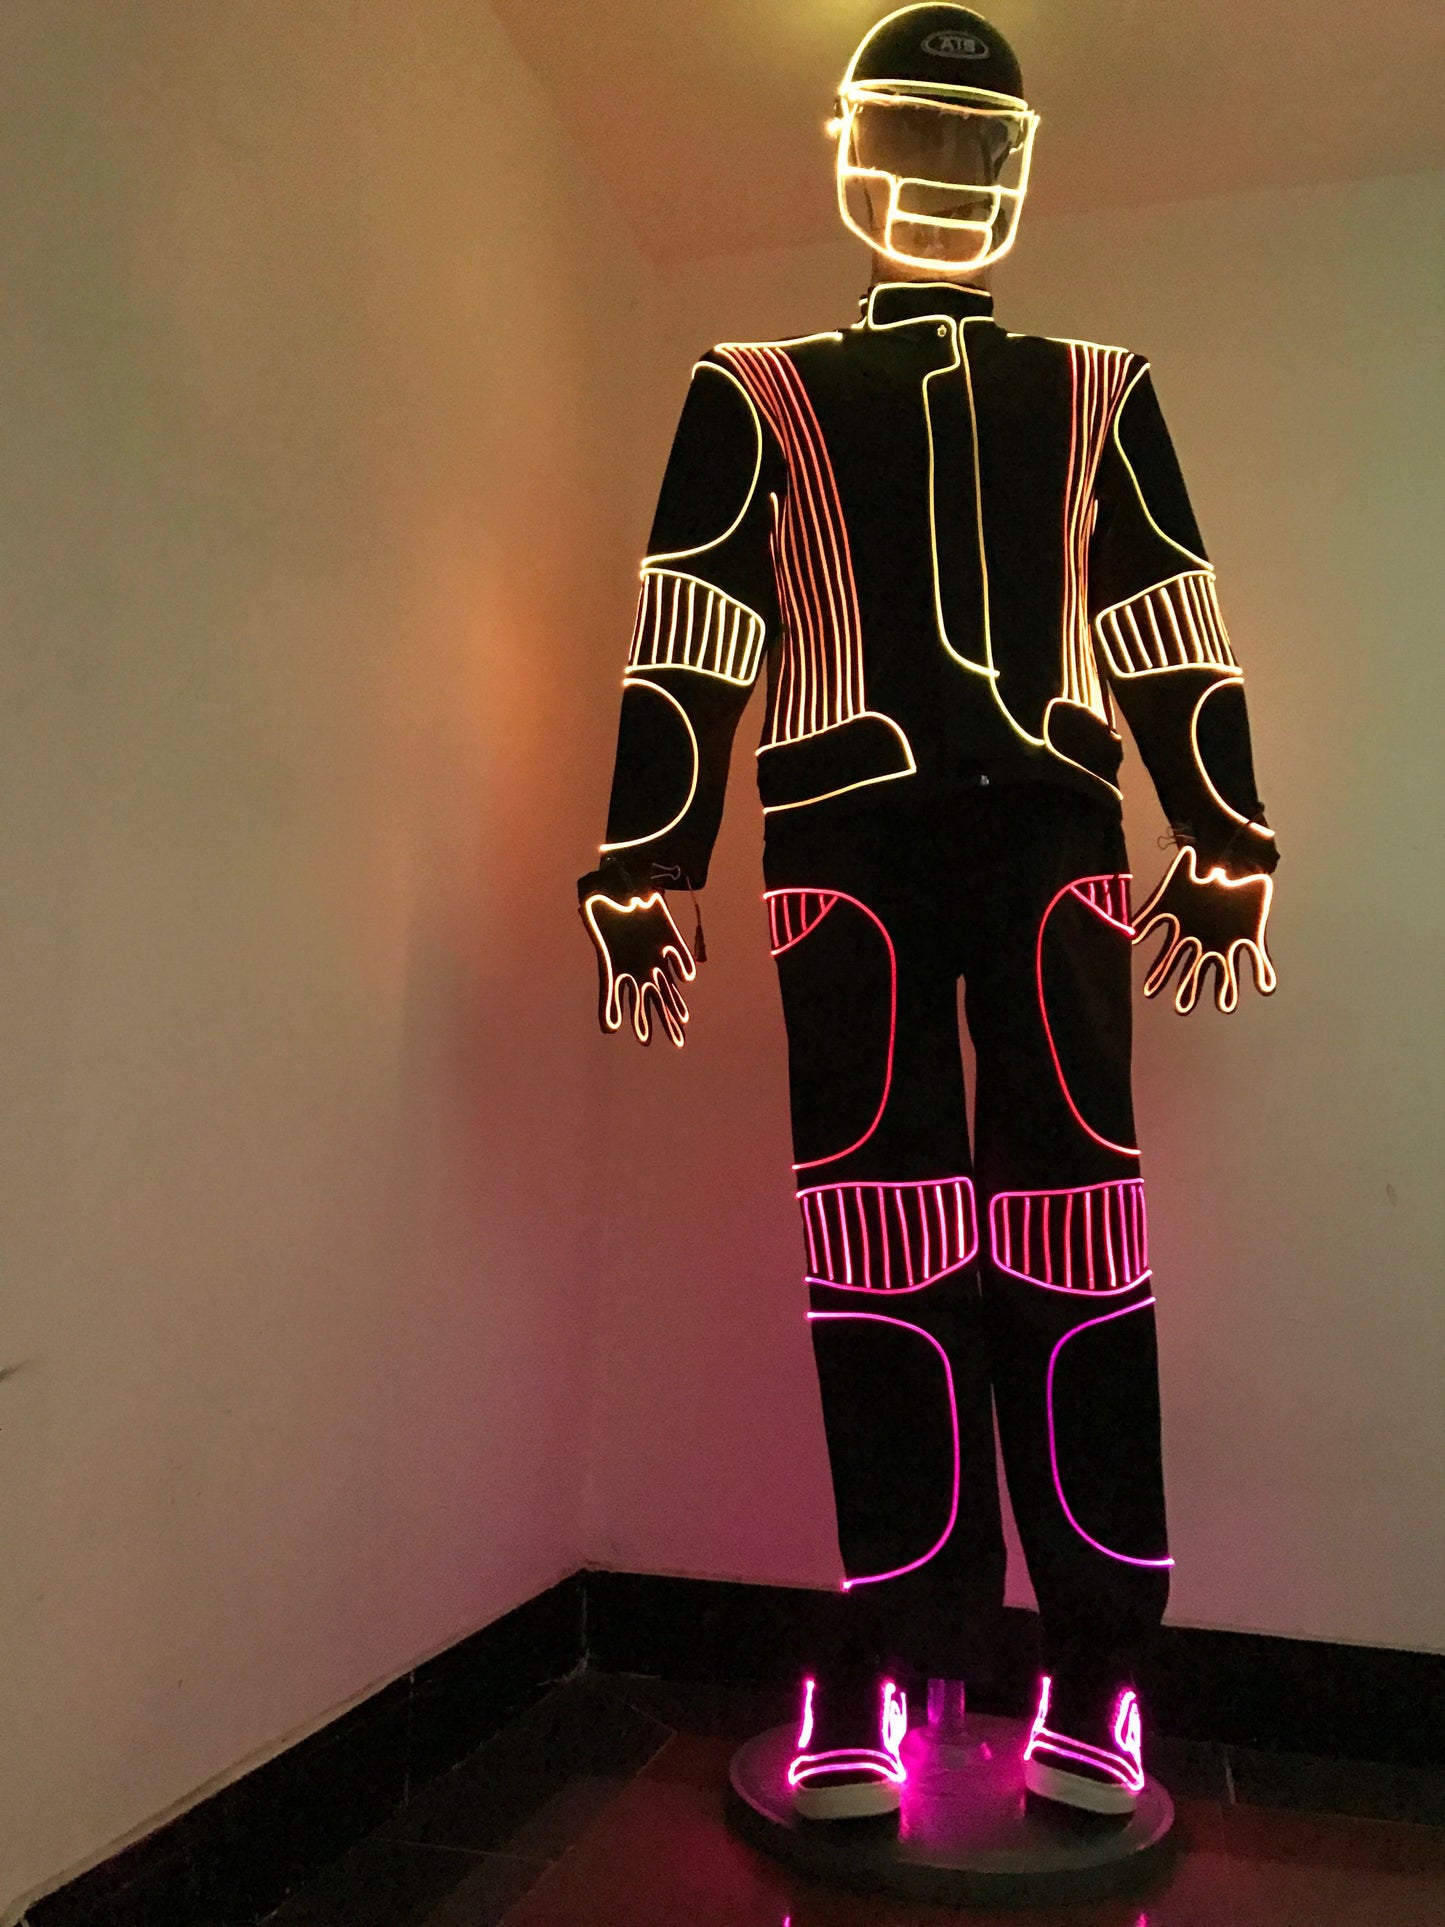 Traje de baile de fibra óptica LED Michael jackson